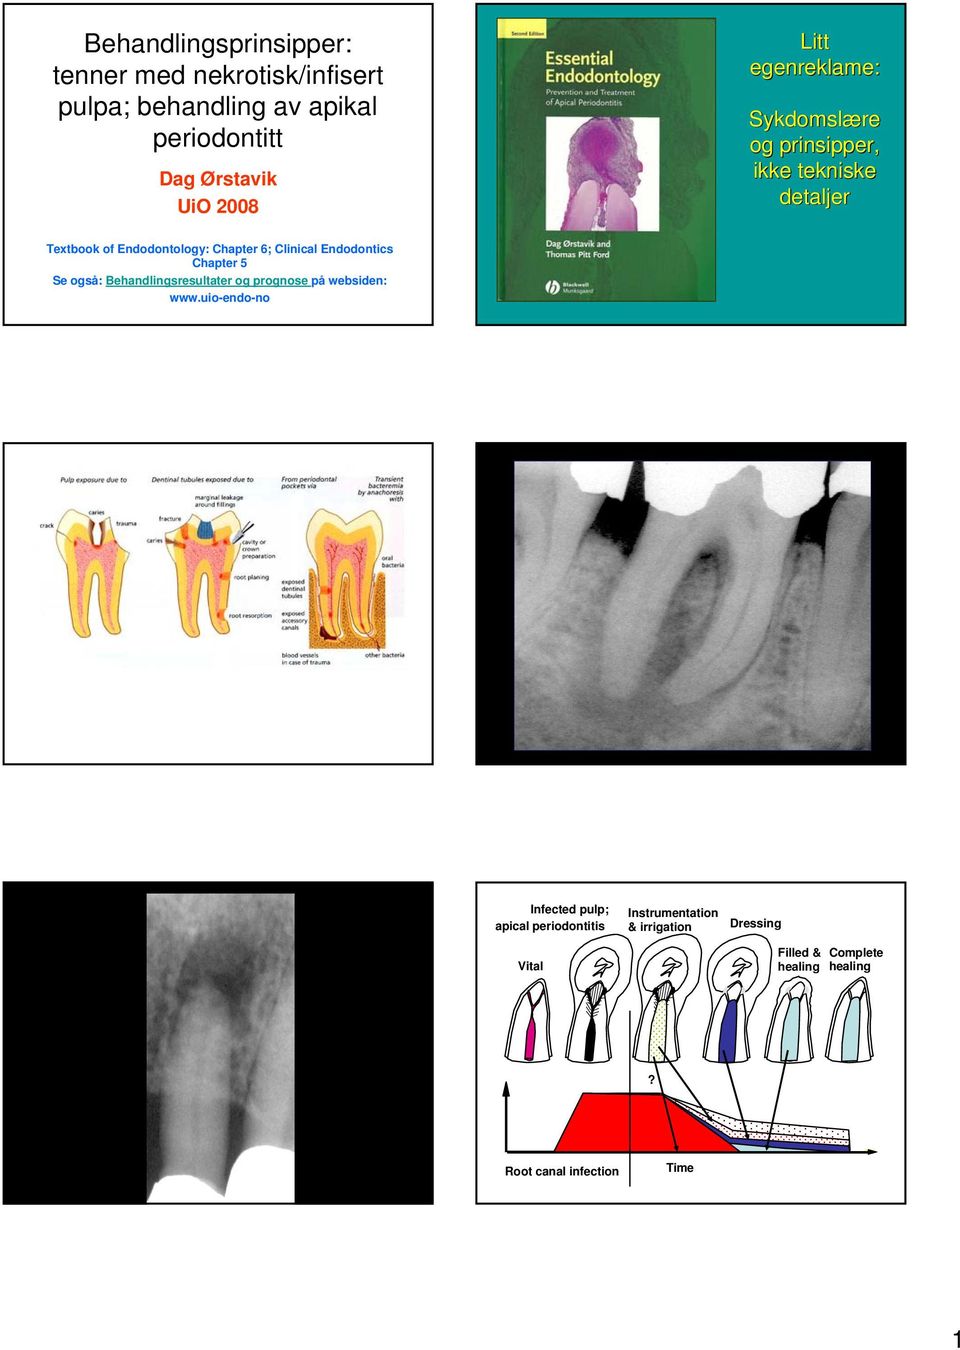 Clinical Endodontics Chapter 5 Se også: Behandlingsresultater og prognose på websiden: www.